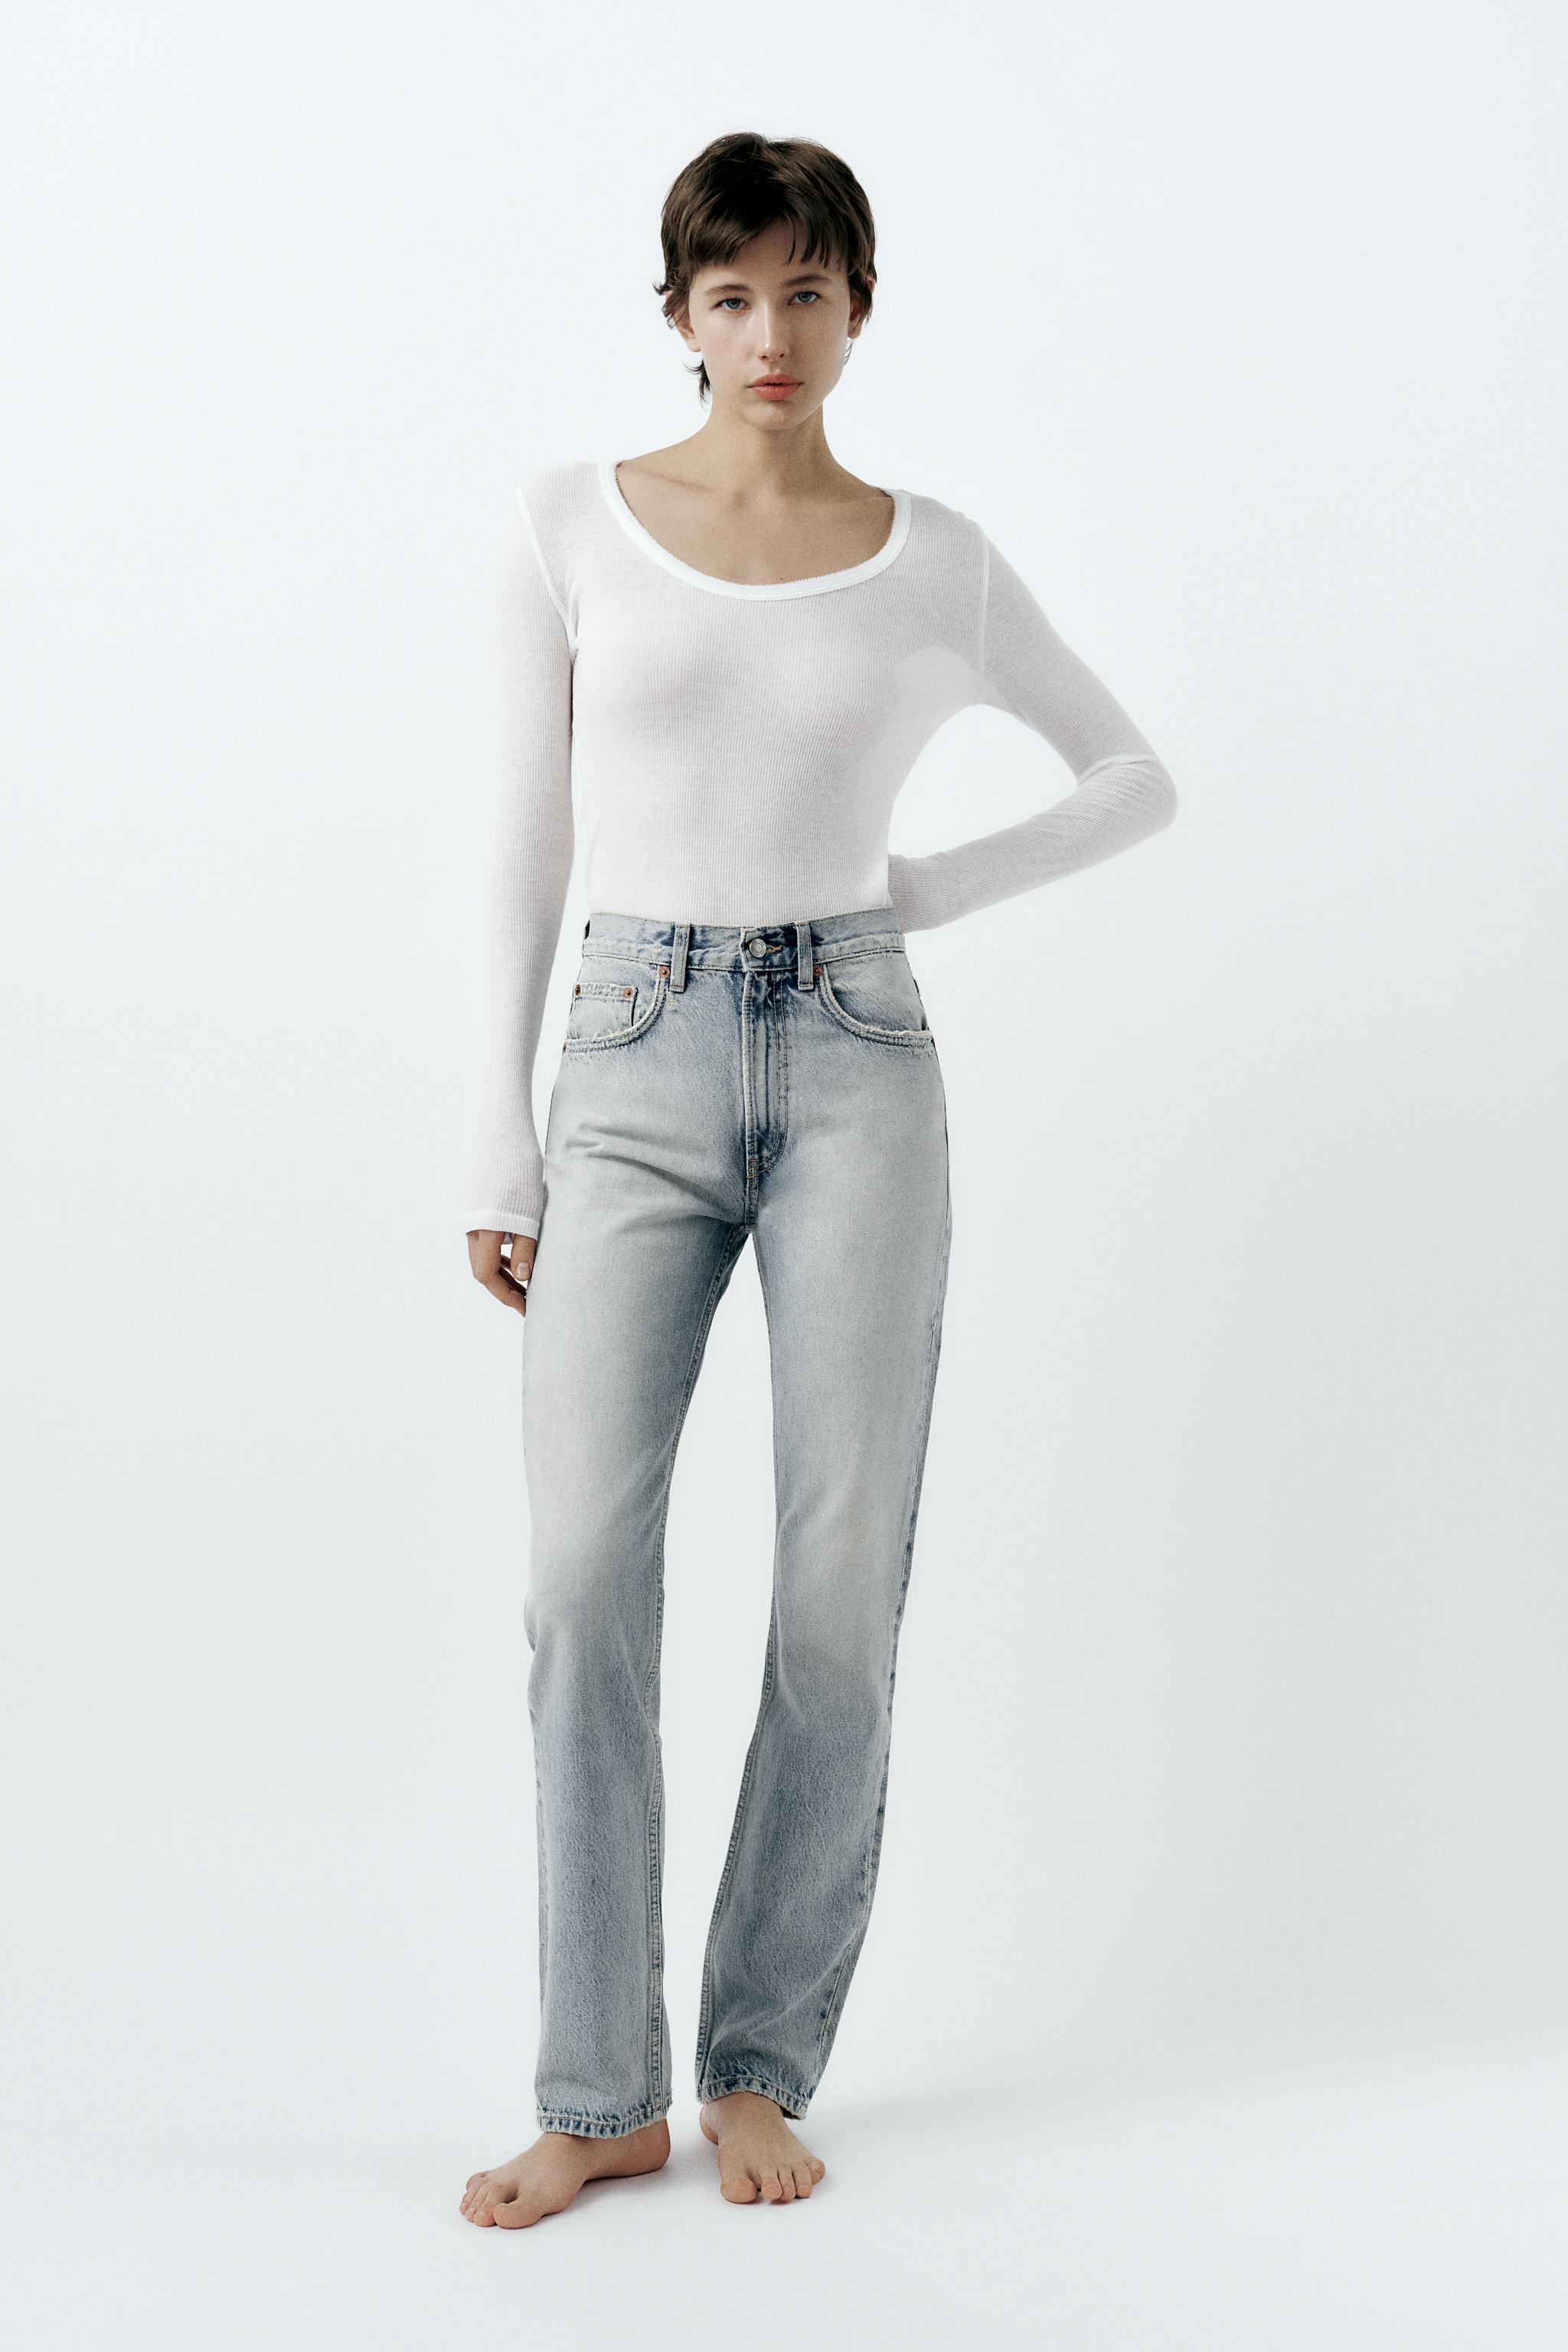 NEW Zara Slim Fit High Waist Rise Ripped Distressed Jeans Light